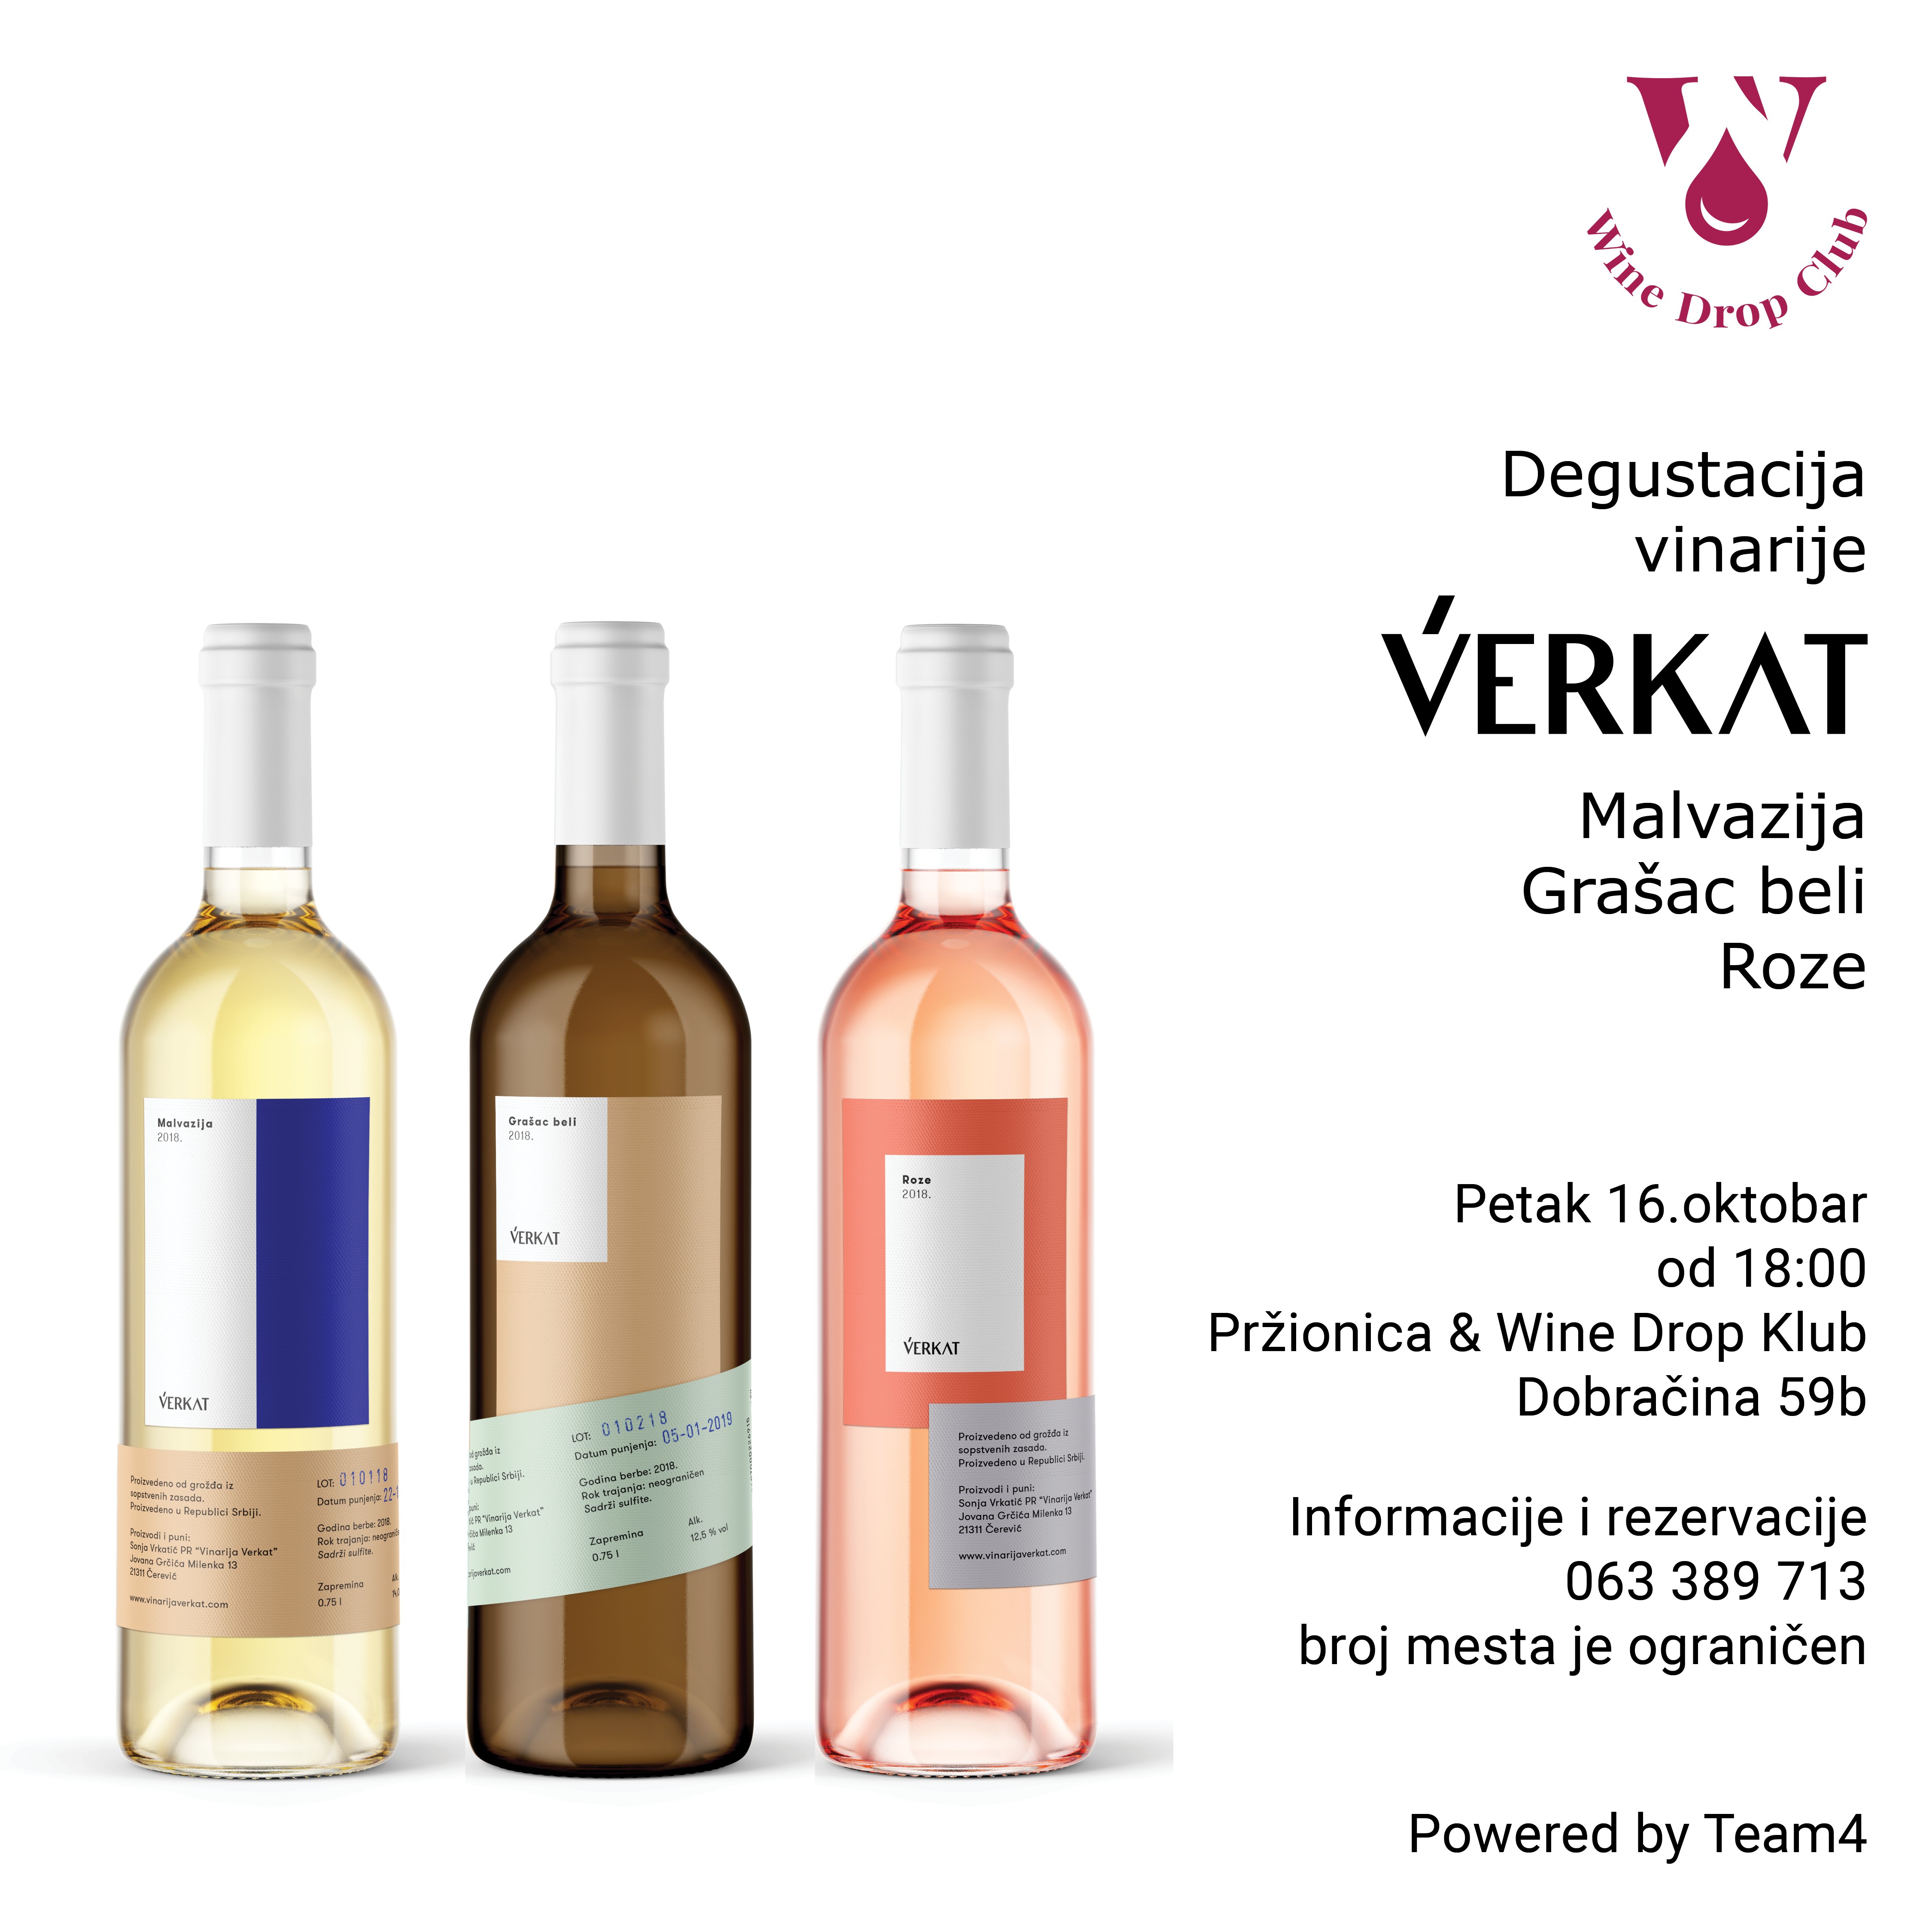 Degistacija vinarije VERKAT